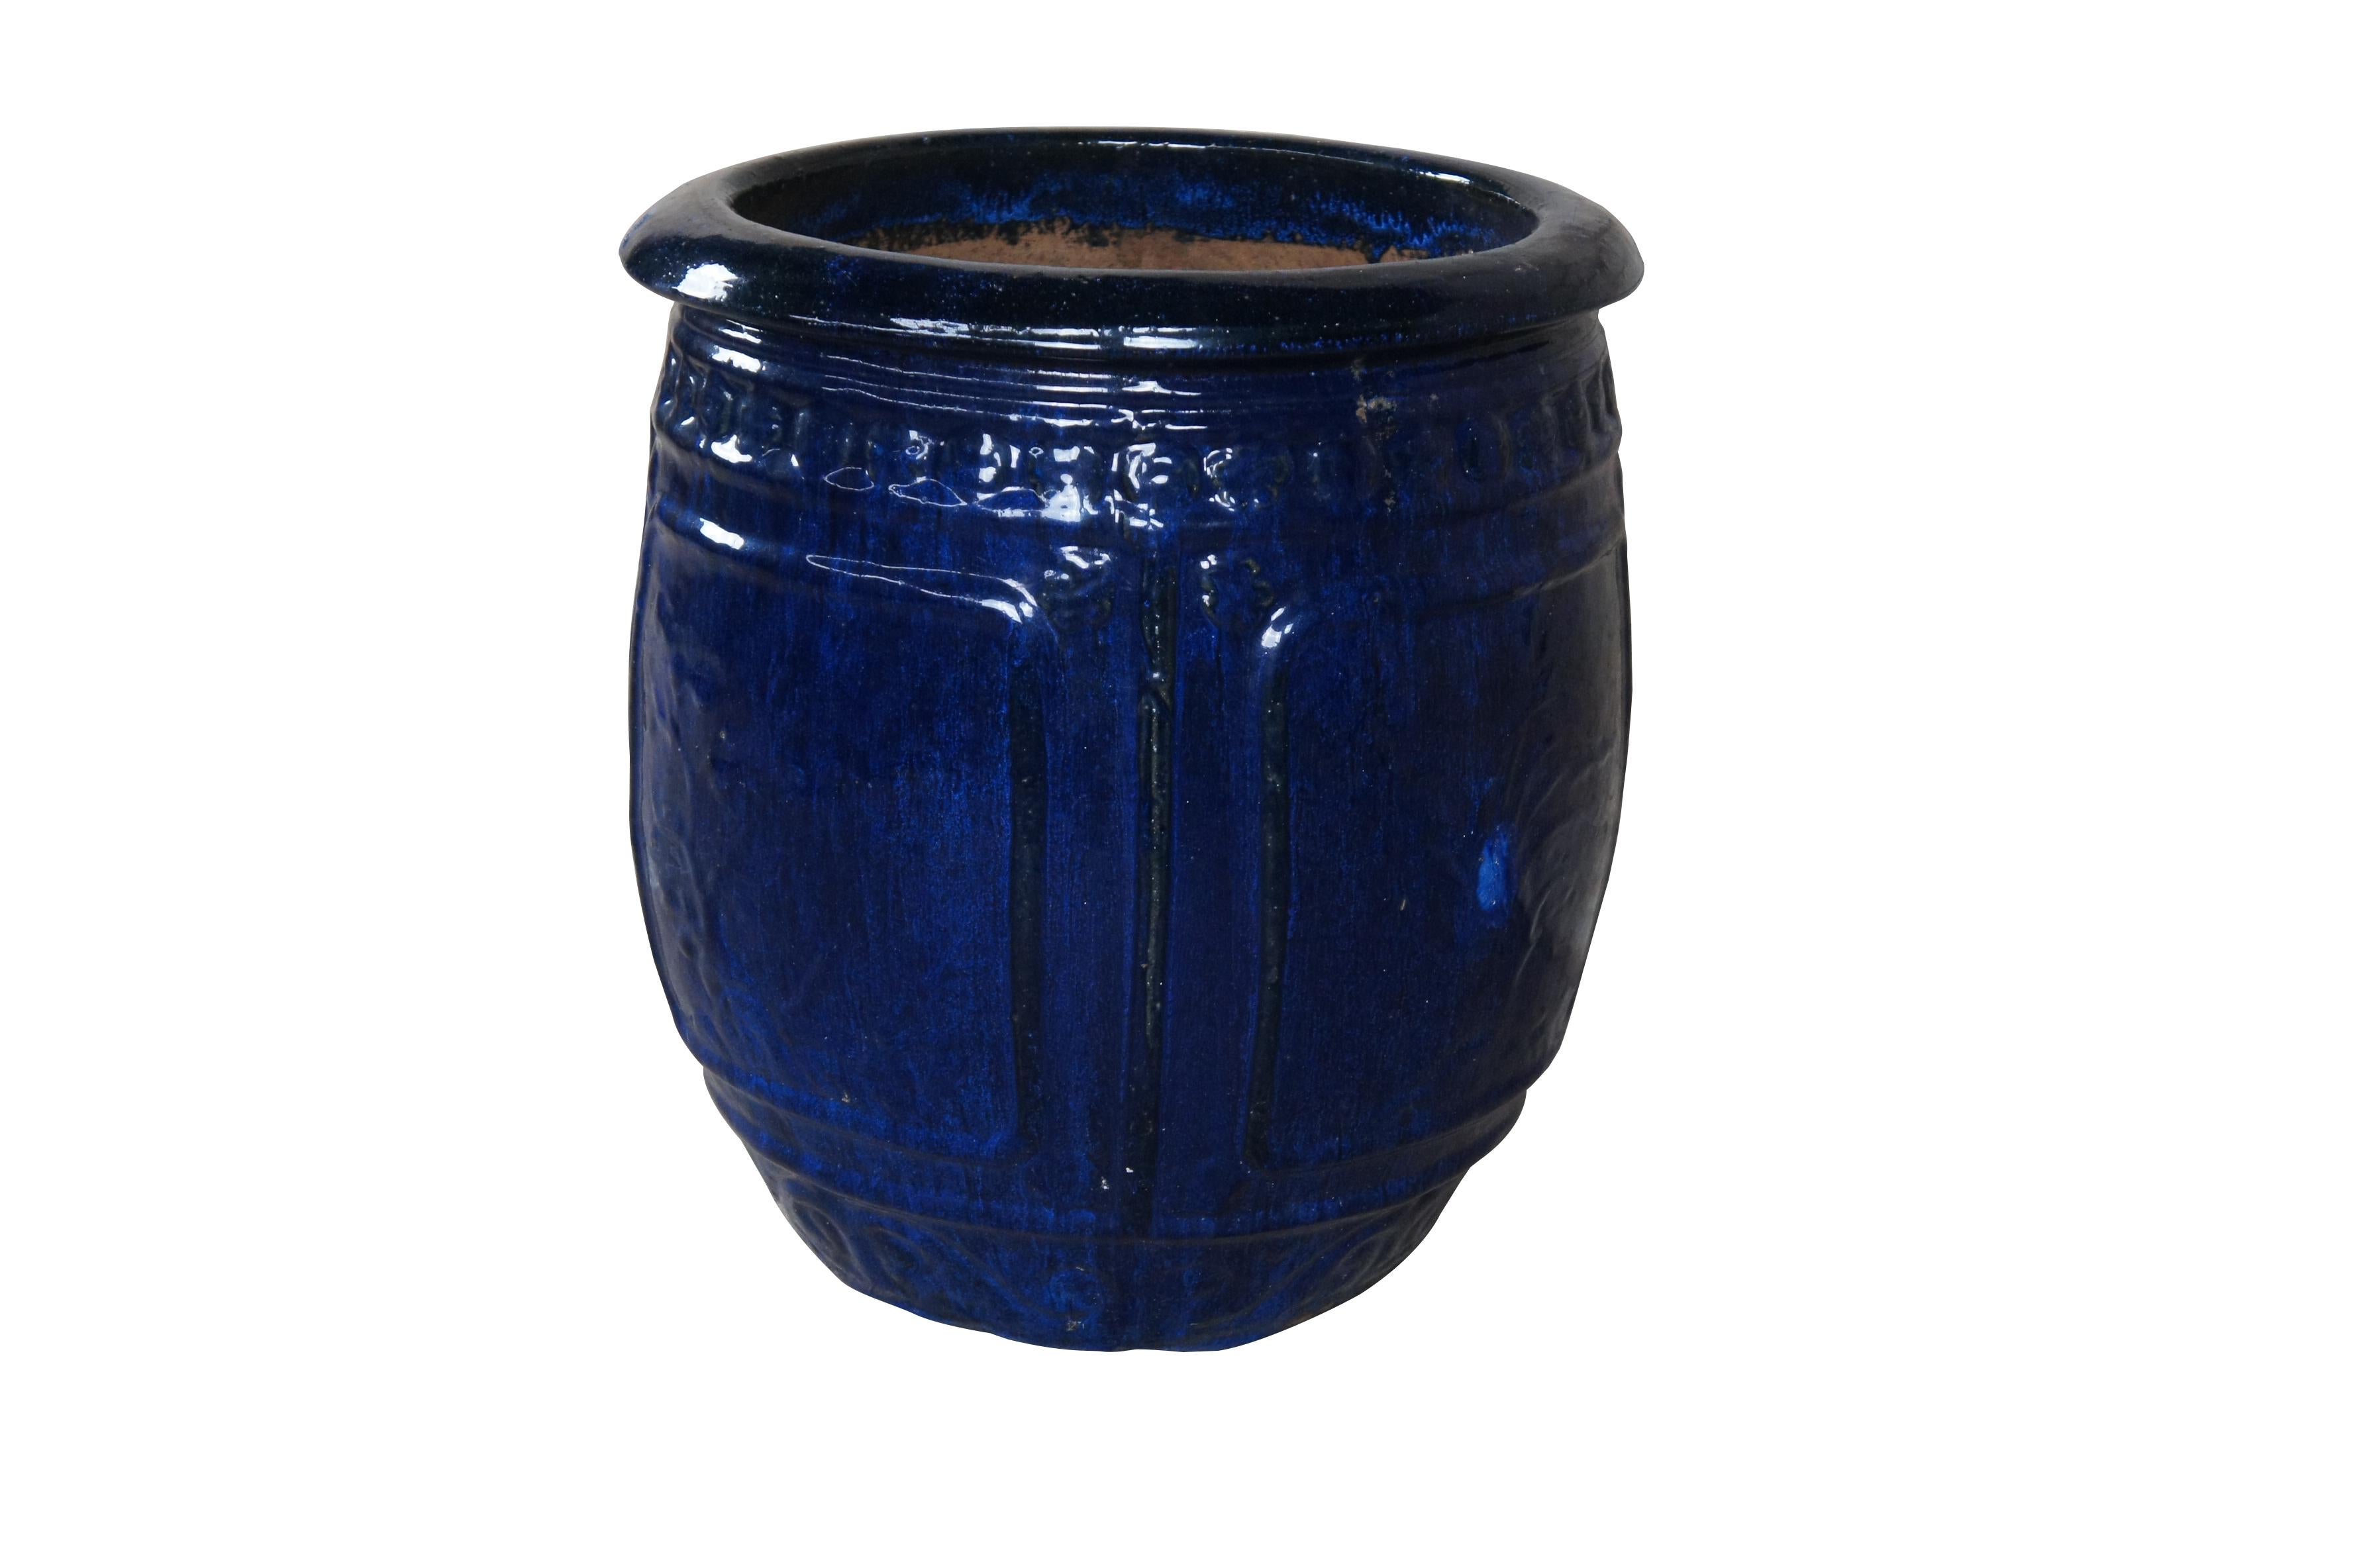 French Provincial Vintage French Modern Blue Glazed Ceramic Jardinière Urn Planter Pot 19